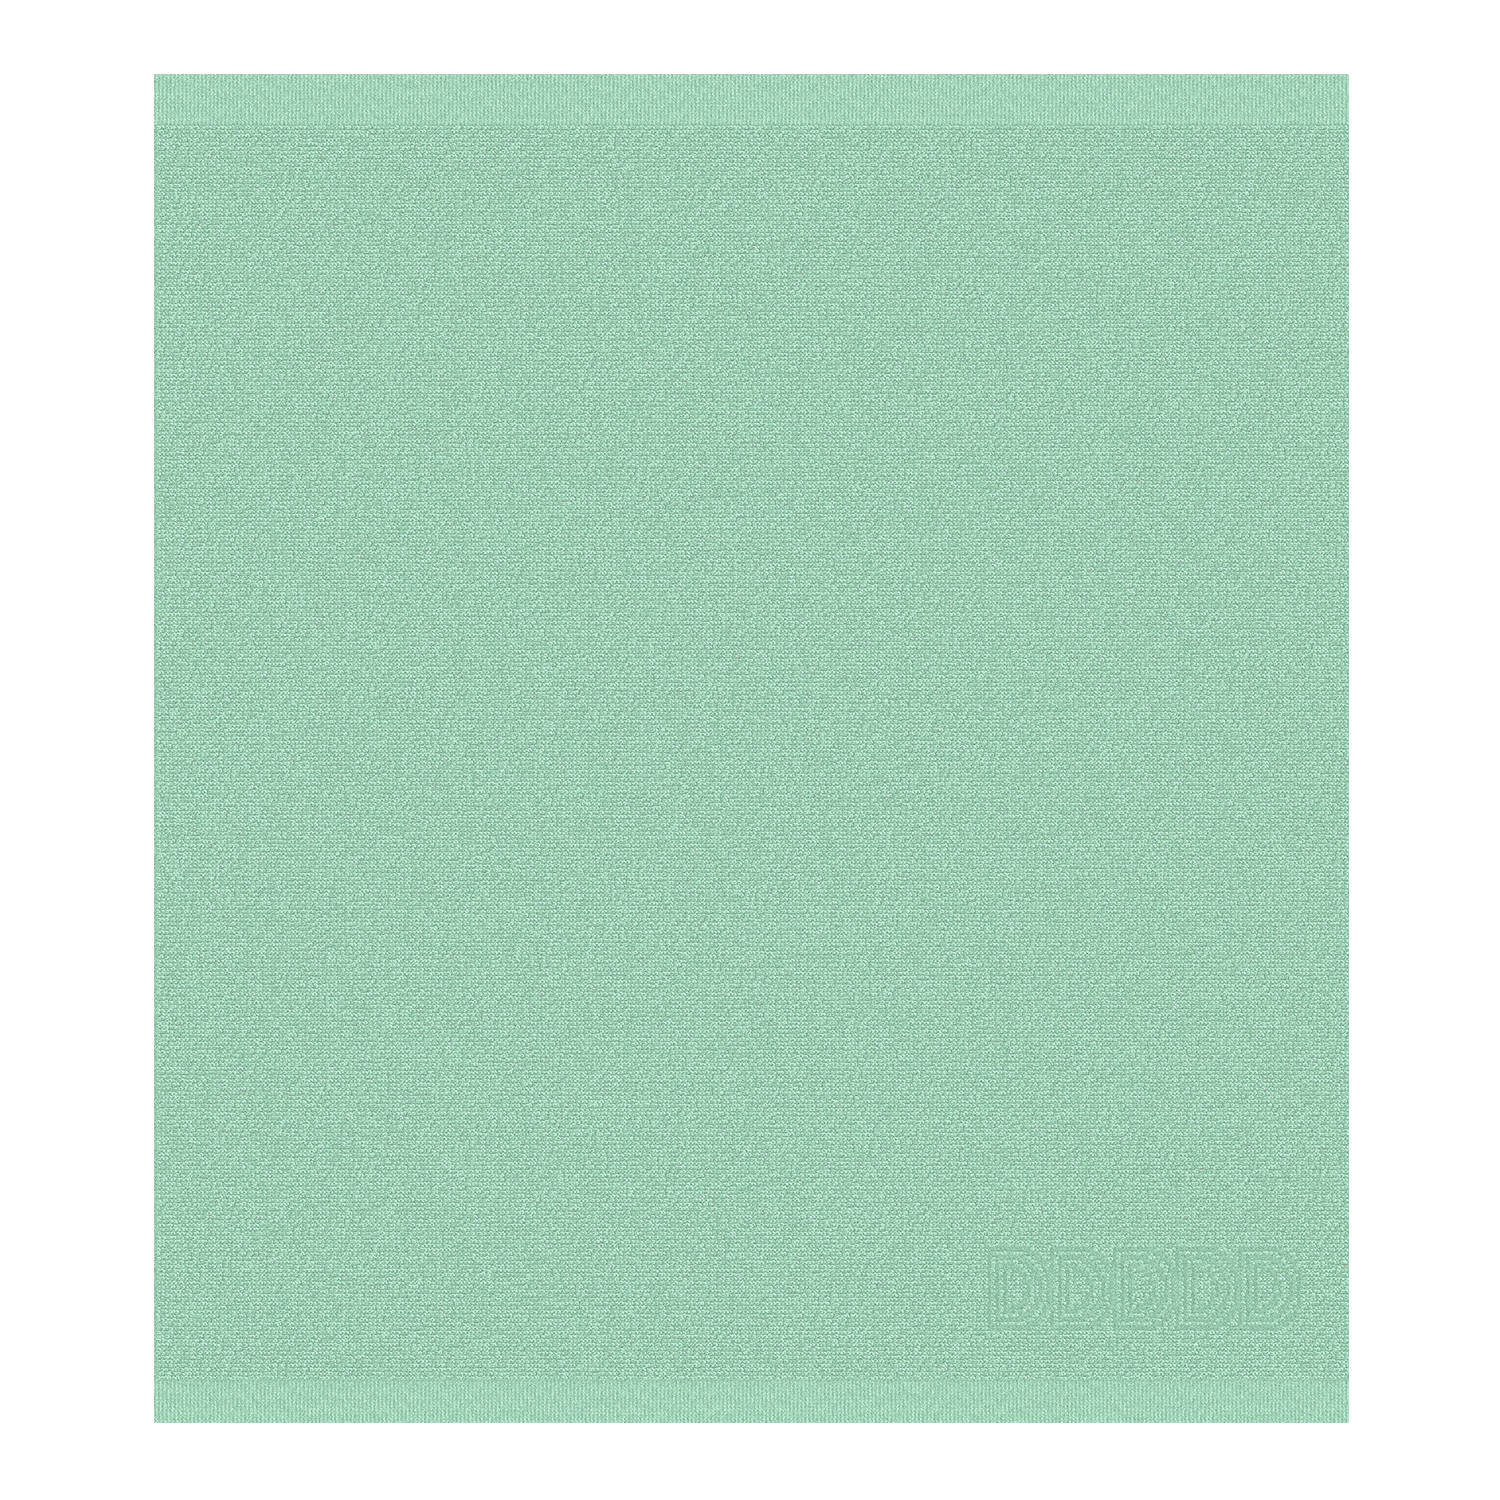 DDDDD keukendoek Logo - 50x55 cm - pastel Groen - 6 stuks